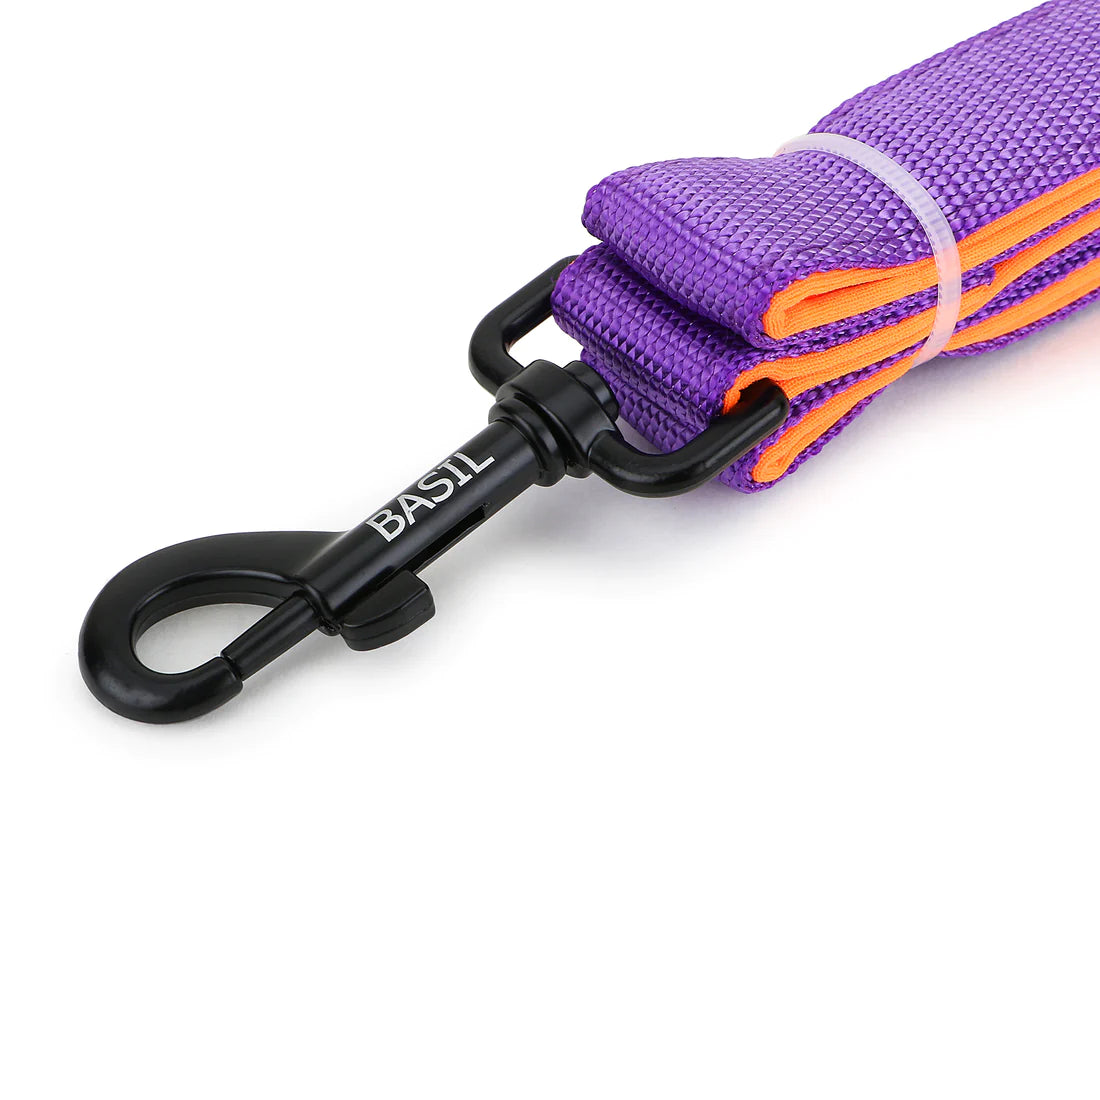 Basil Padded Leash for Dogs & Puppies Purple/Orange